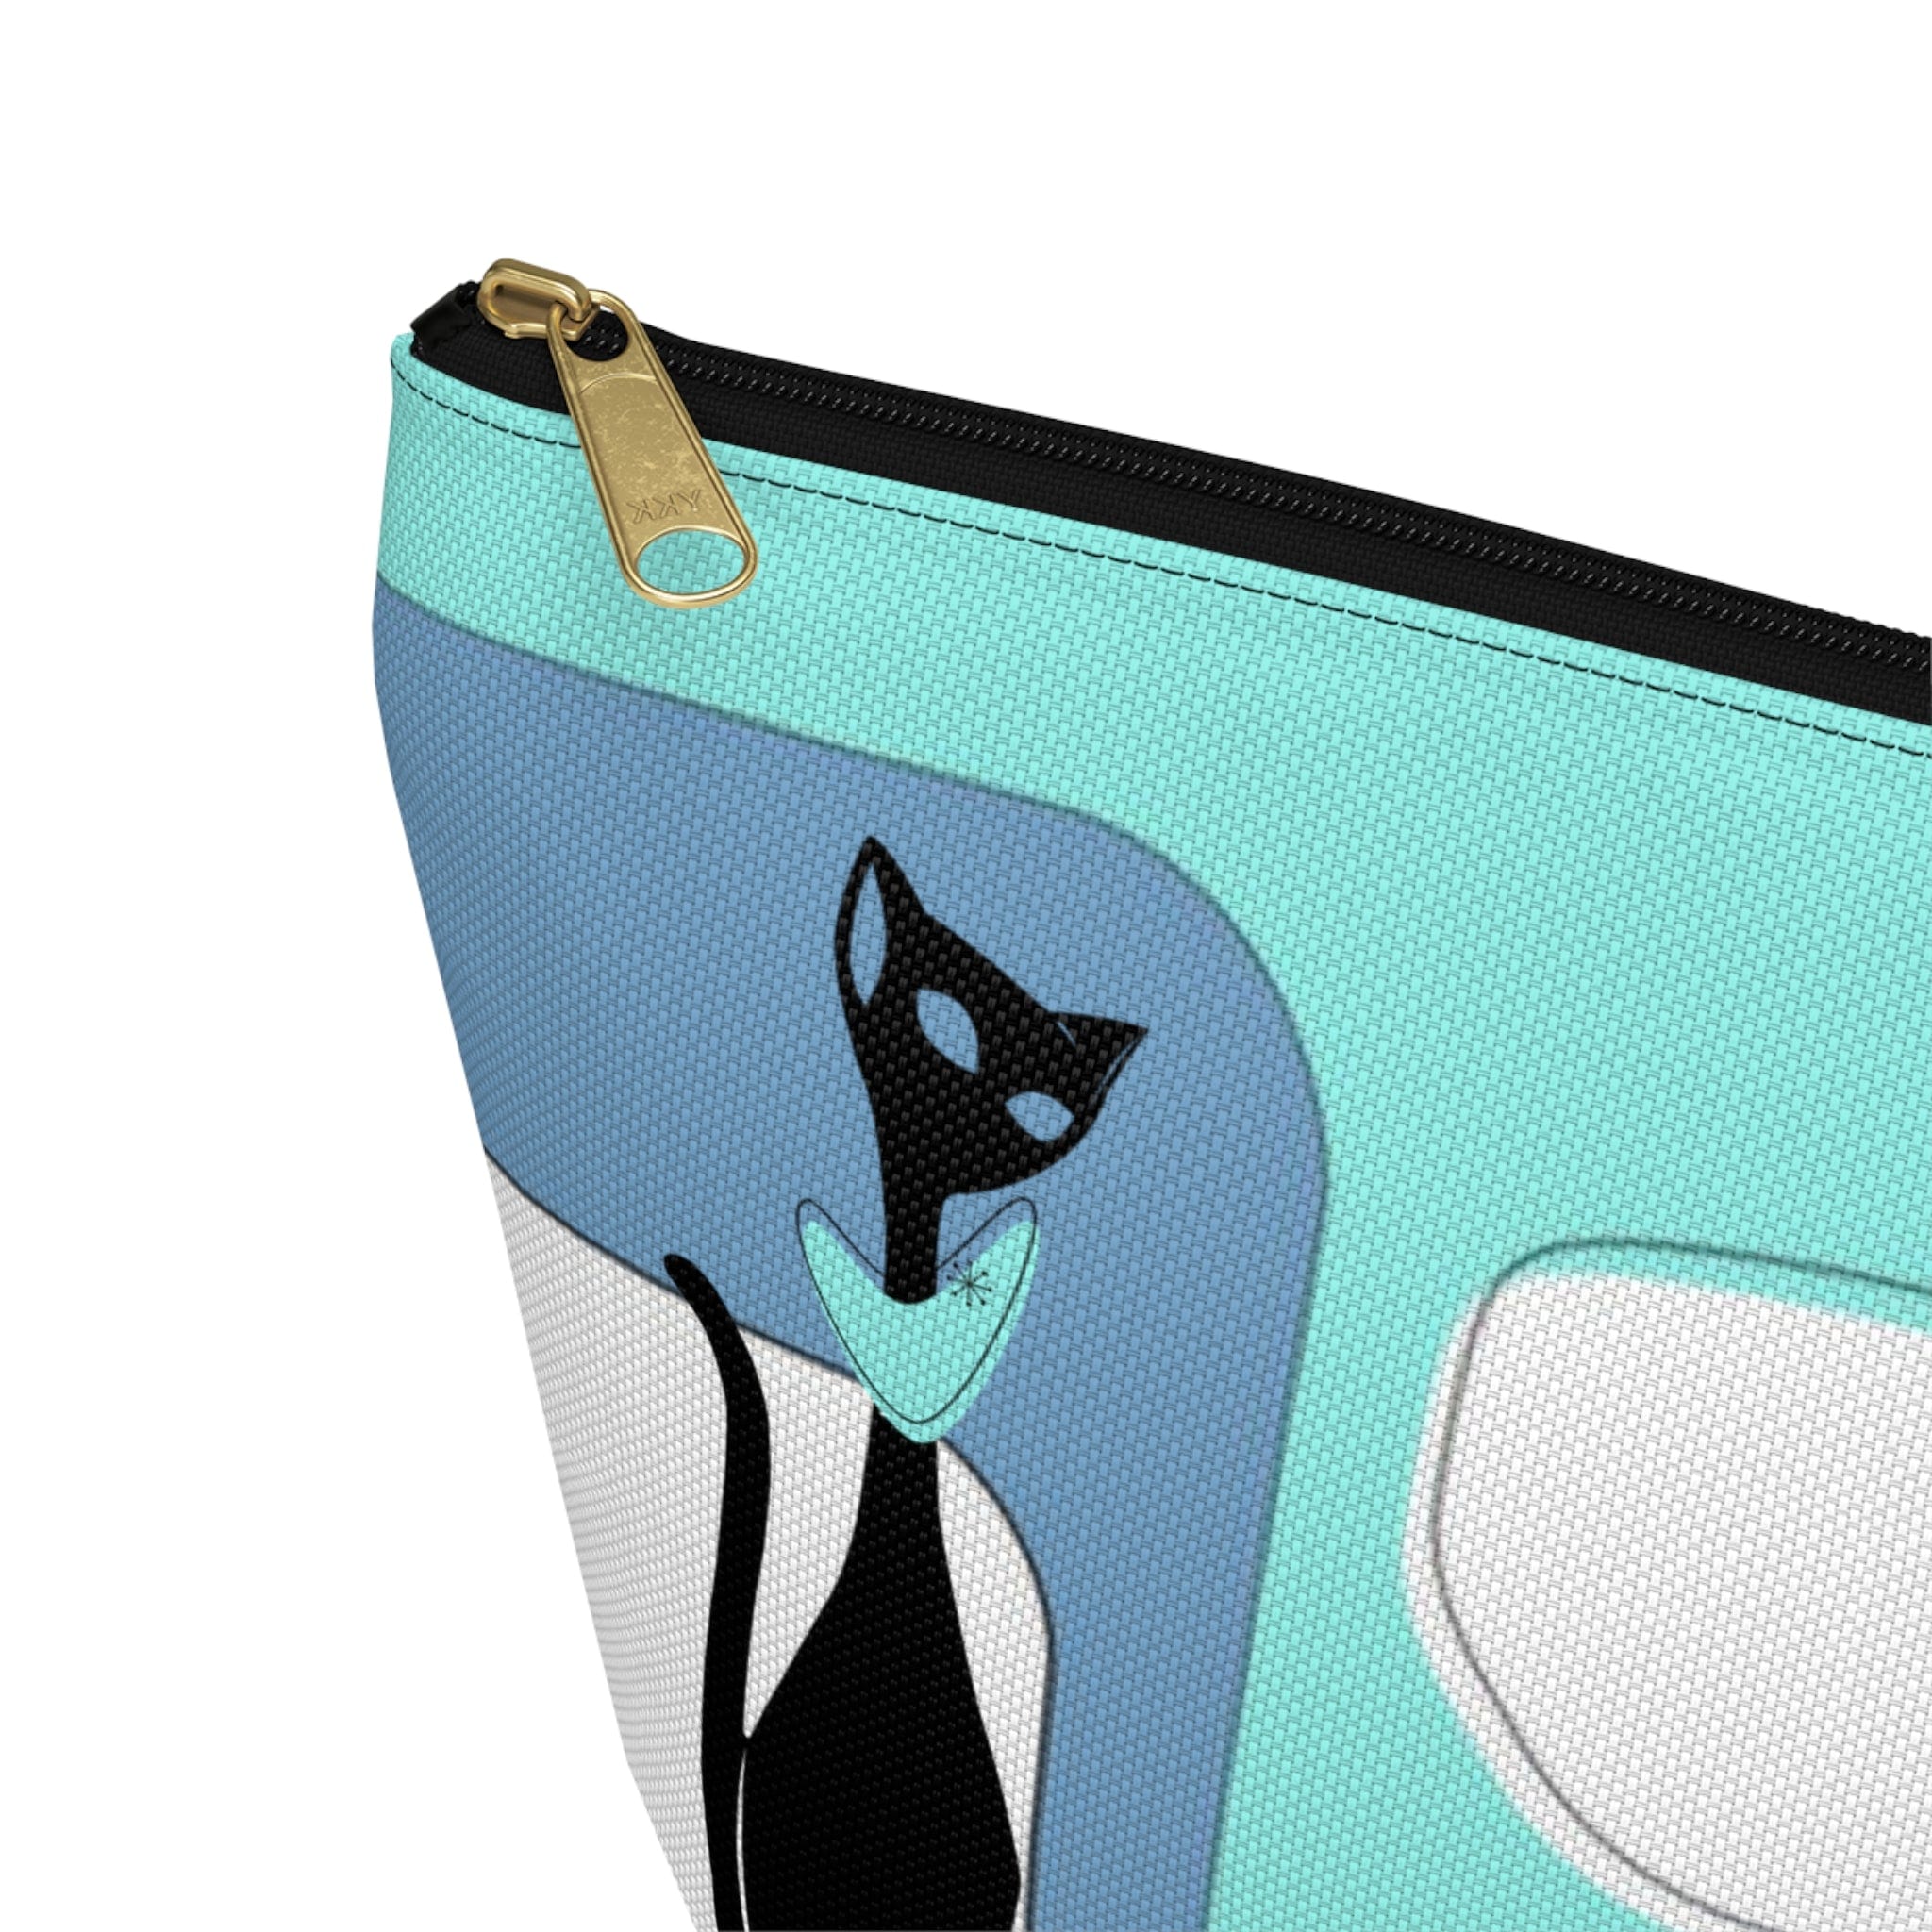 Atomic Cat, Aqua Blue, Mid Century Modern Funky Fun, Retro Accessory Pouch w T-bottom Bags